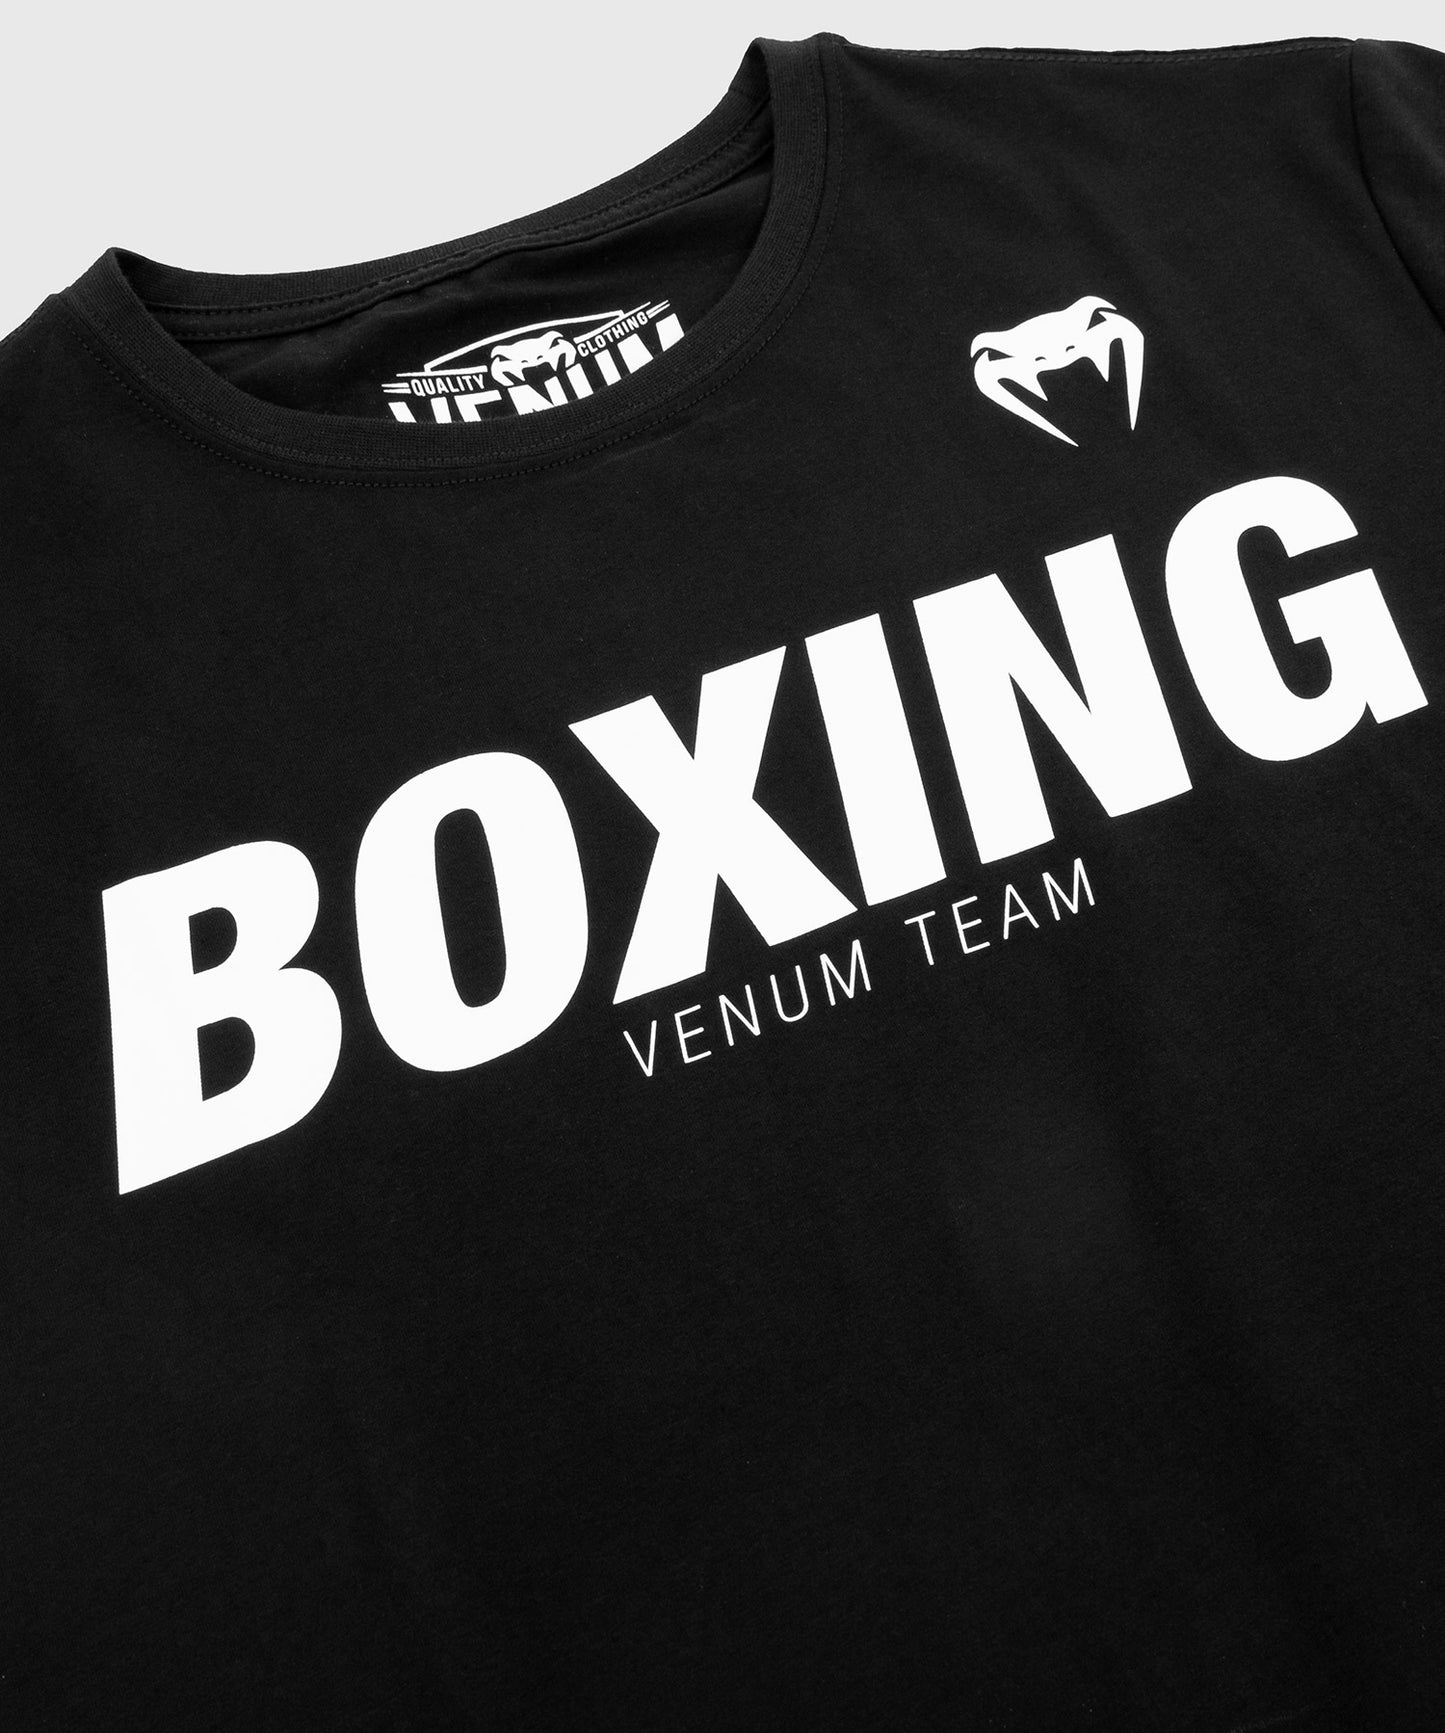 T-shirt Venum Boxing VT - Noir/Blanc